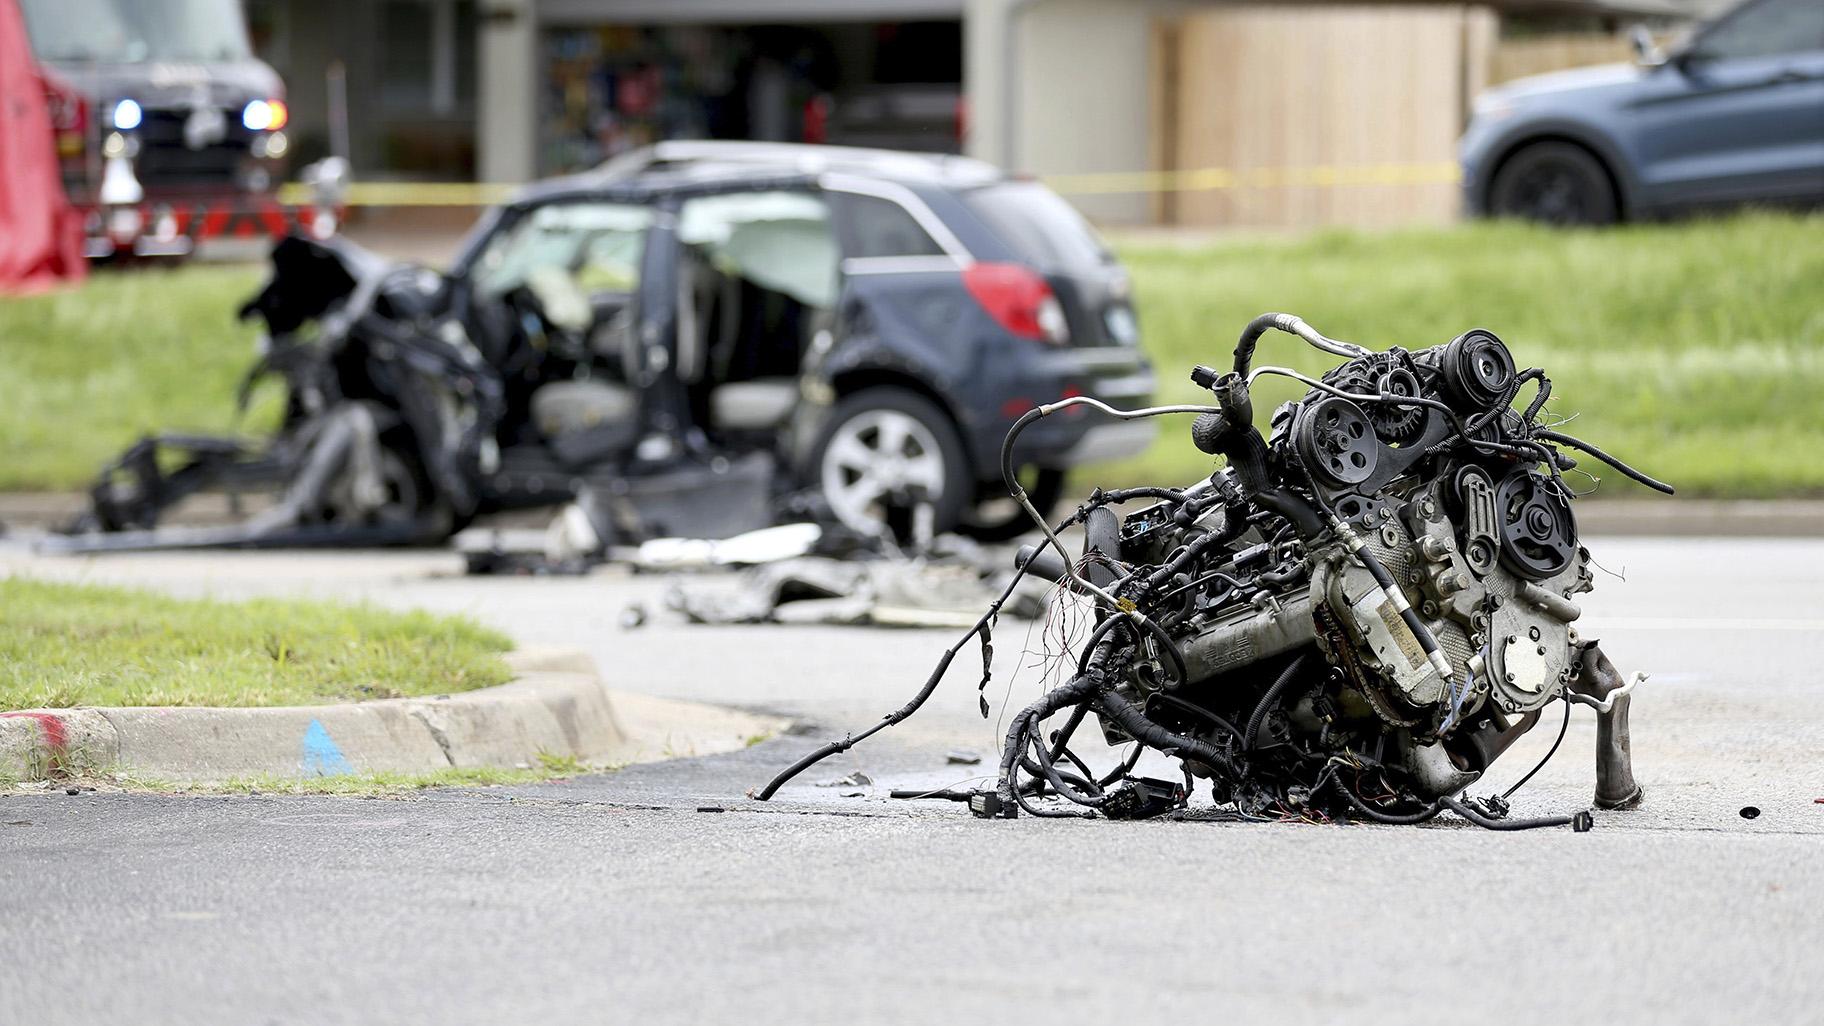 The scene of a fatality car crash, June 2, 2021, in Tulsa, Okla. (Tanner Laws / Tulsa World via AP, File)